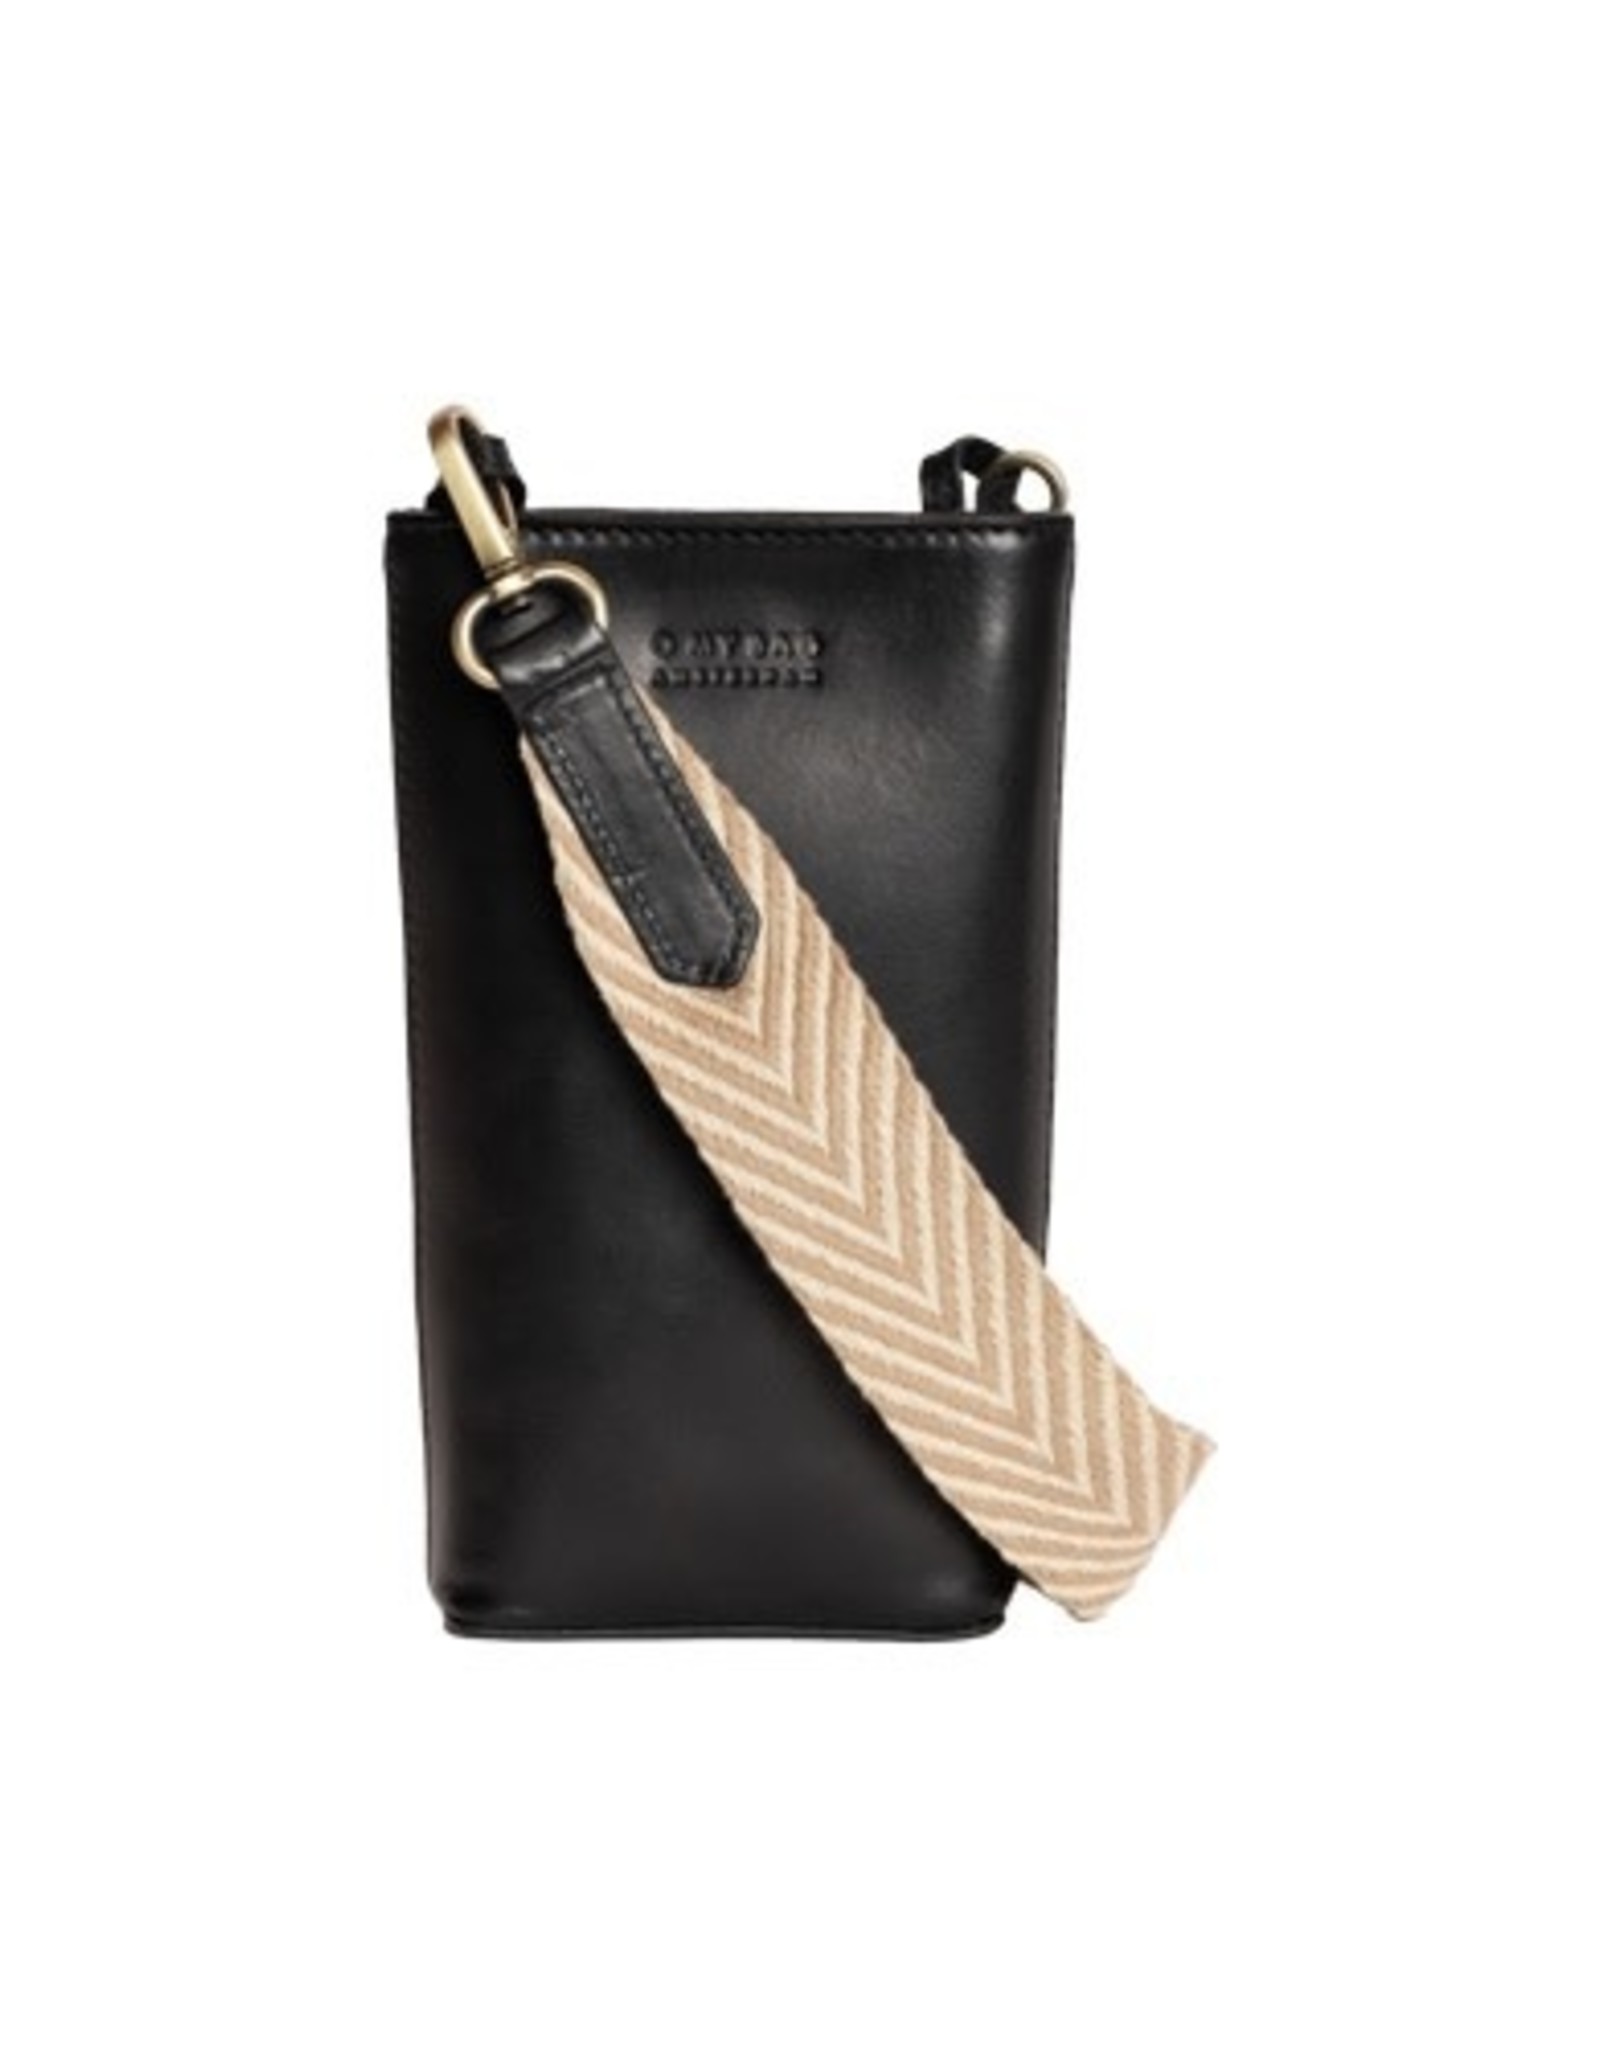 O My Bag Charlie Phone Bag / 2 Straps-black (classic leather)